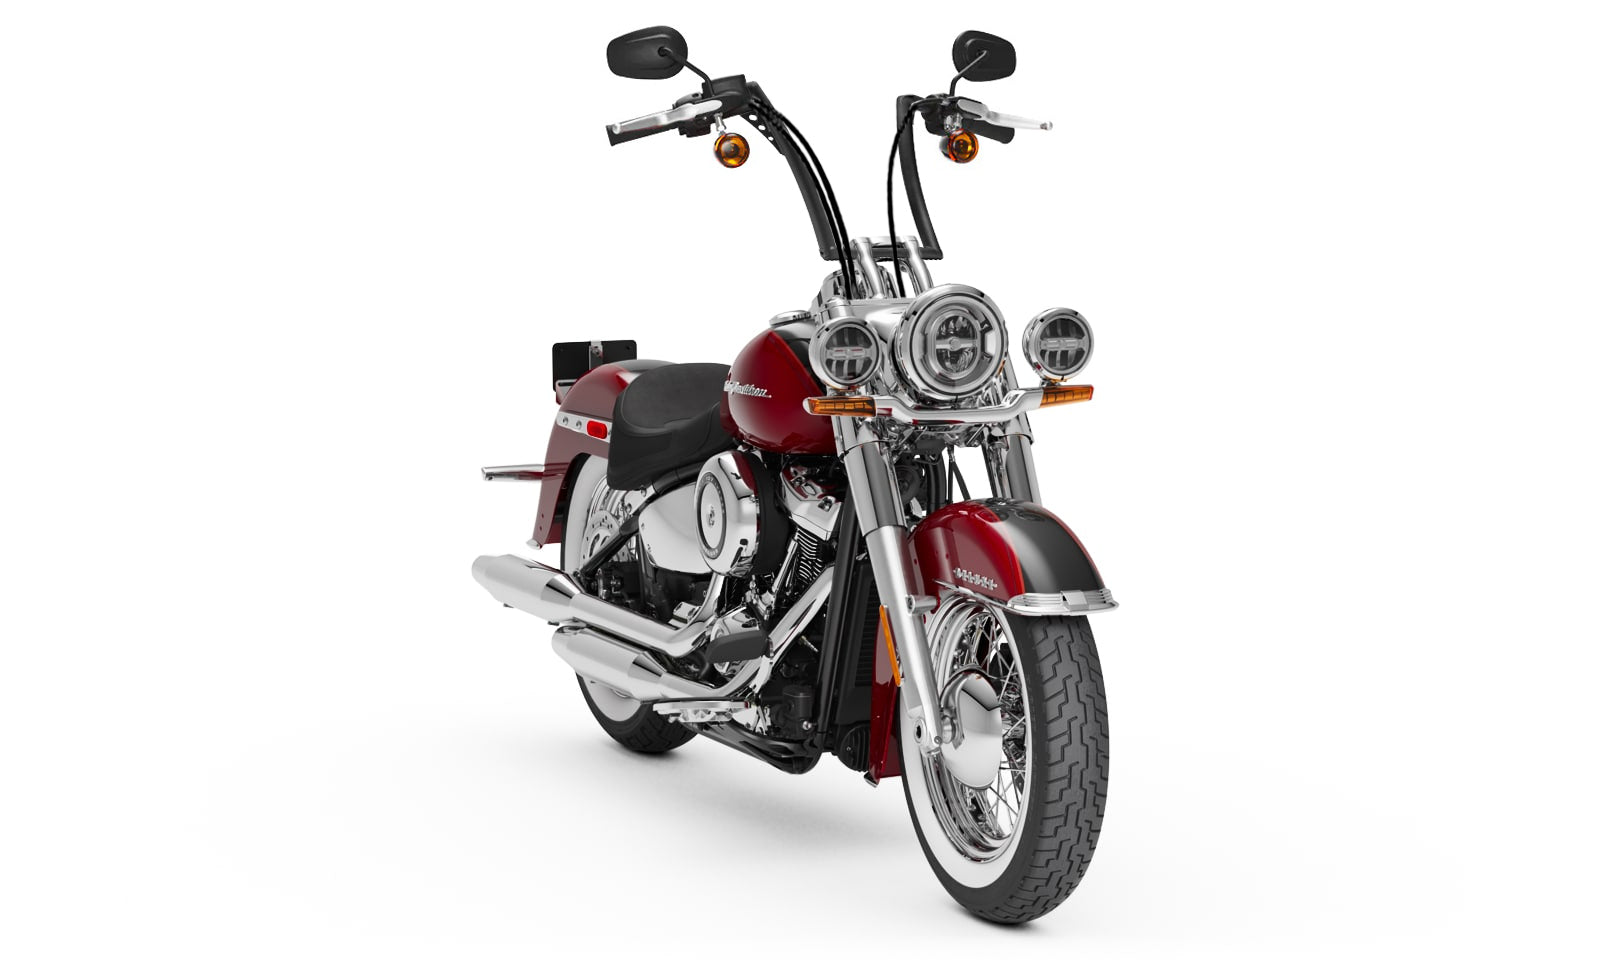 Viking Iron Born 12" Handlebar for Harley Softail Deluxe FLSTN Matte Black Bag on Bike View @expand